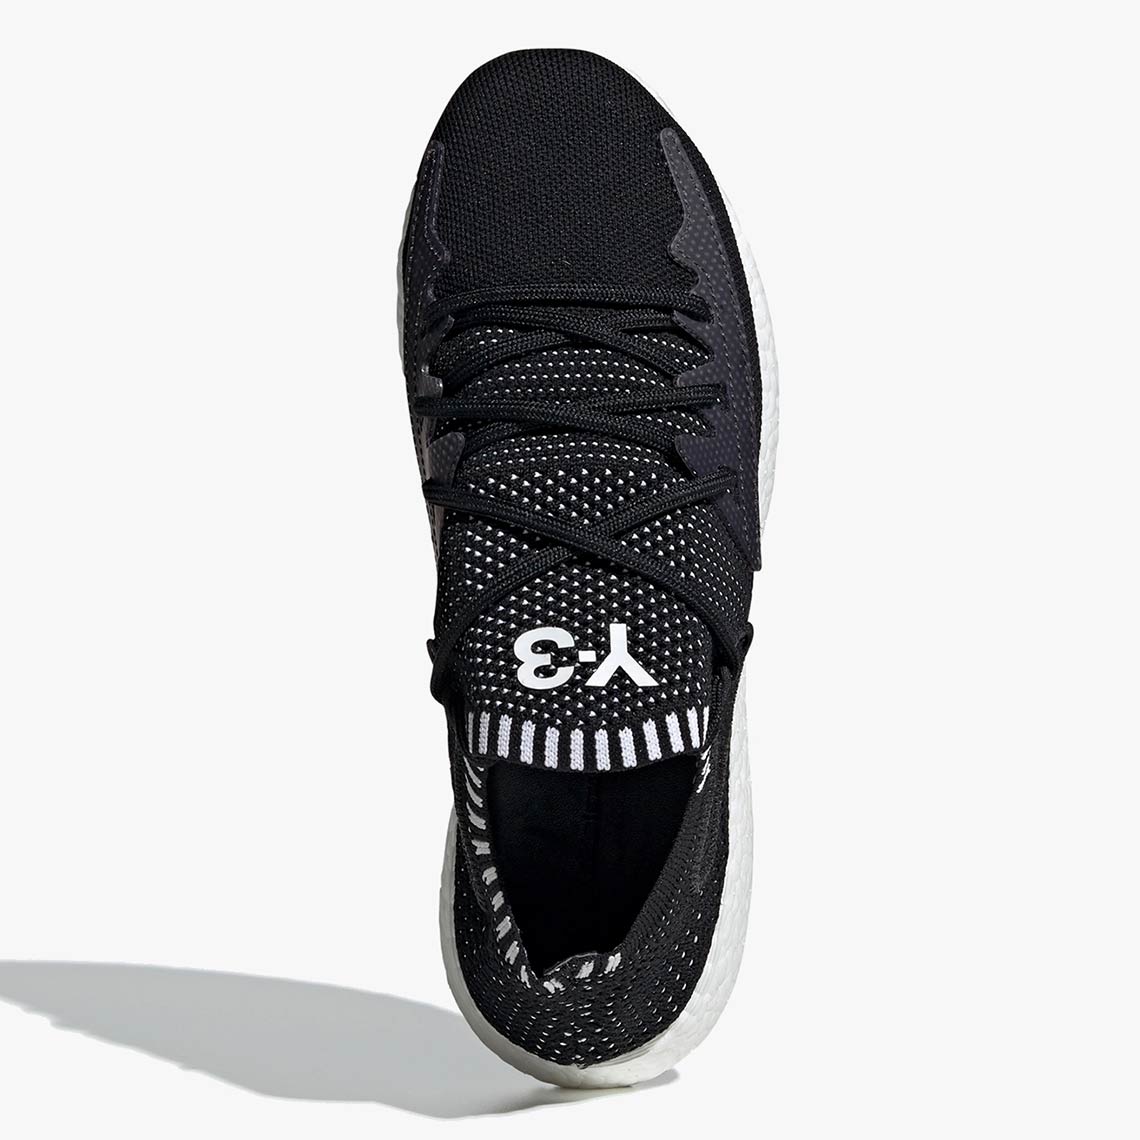 adidas Y-3 Ratio Racer F97405 + F97404 Store Links | SneakerNews.com